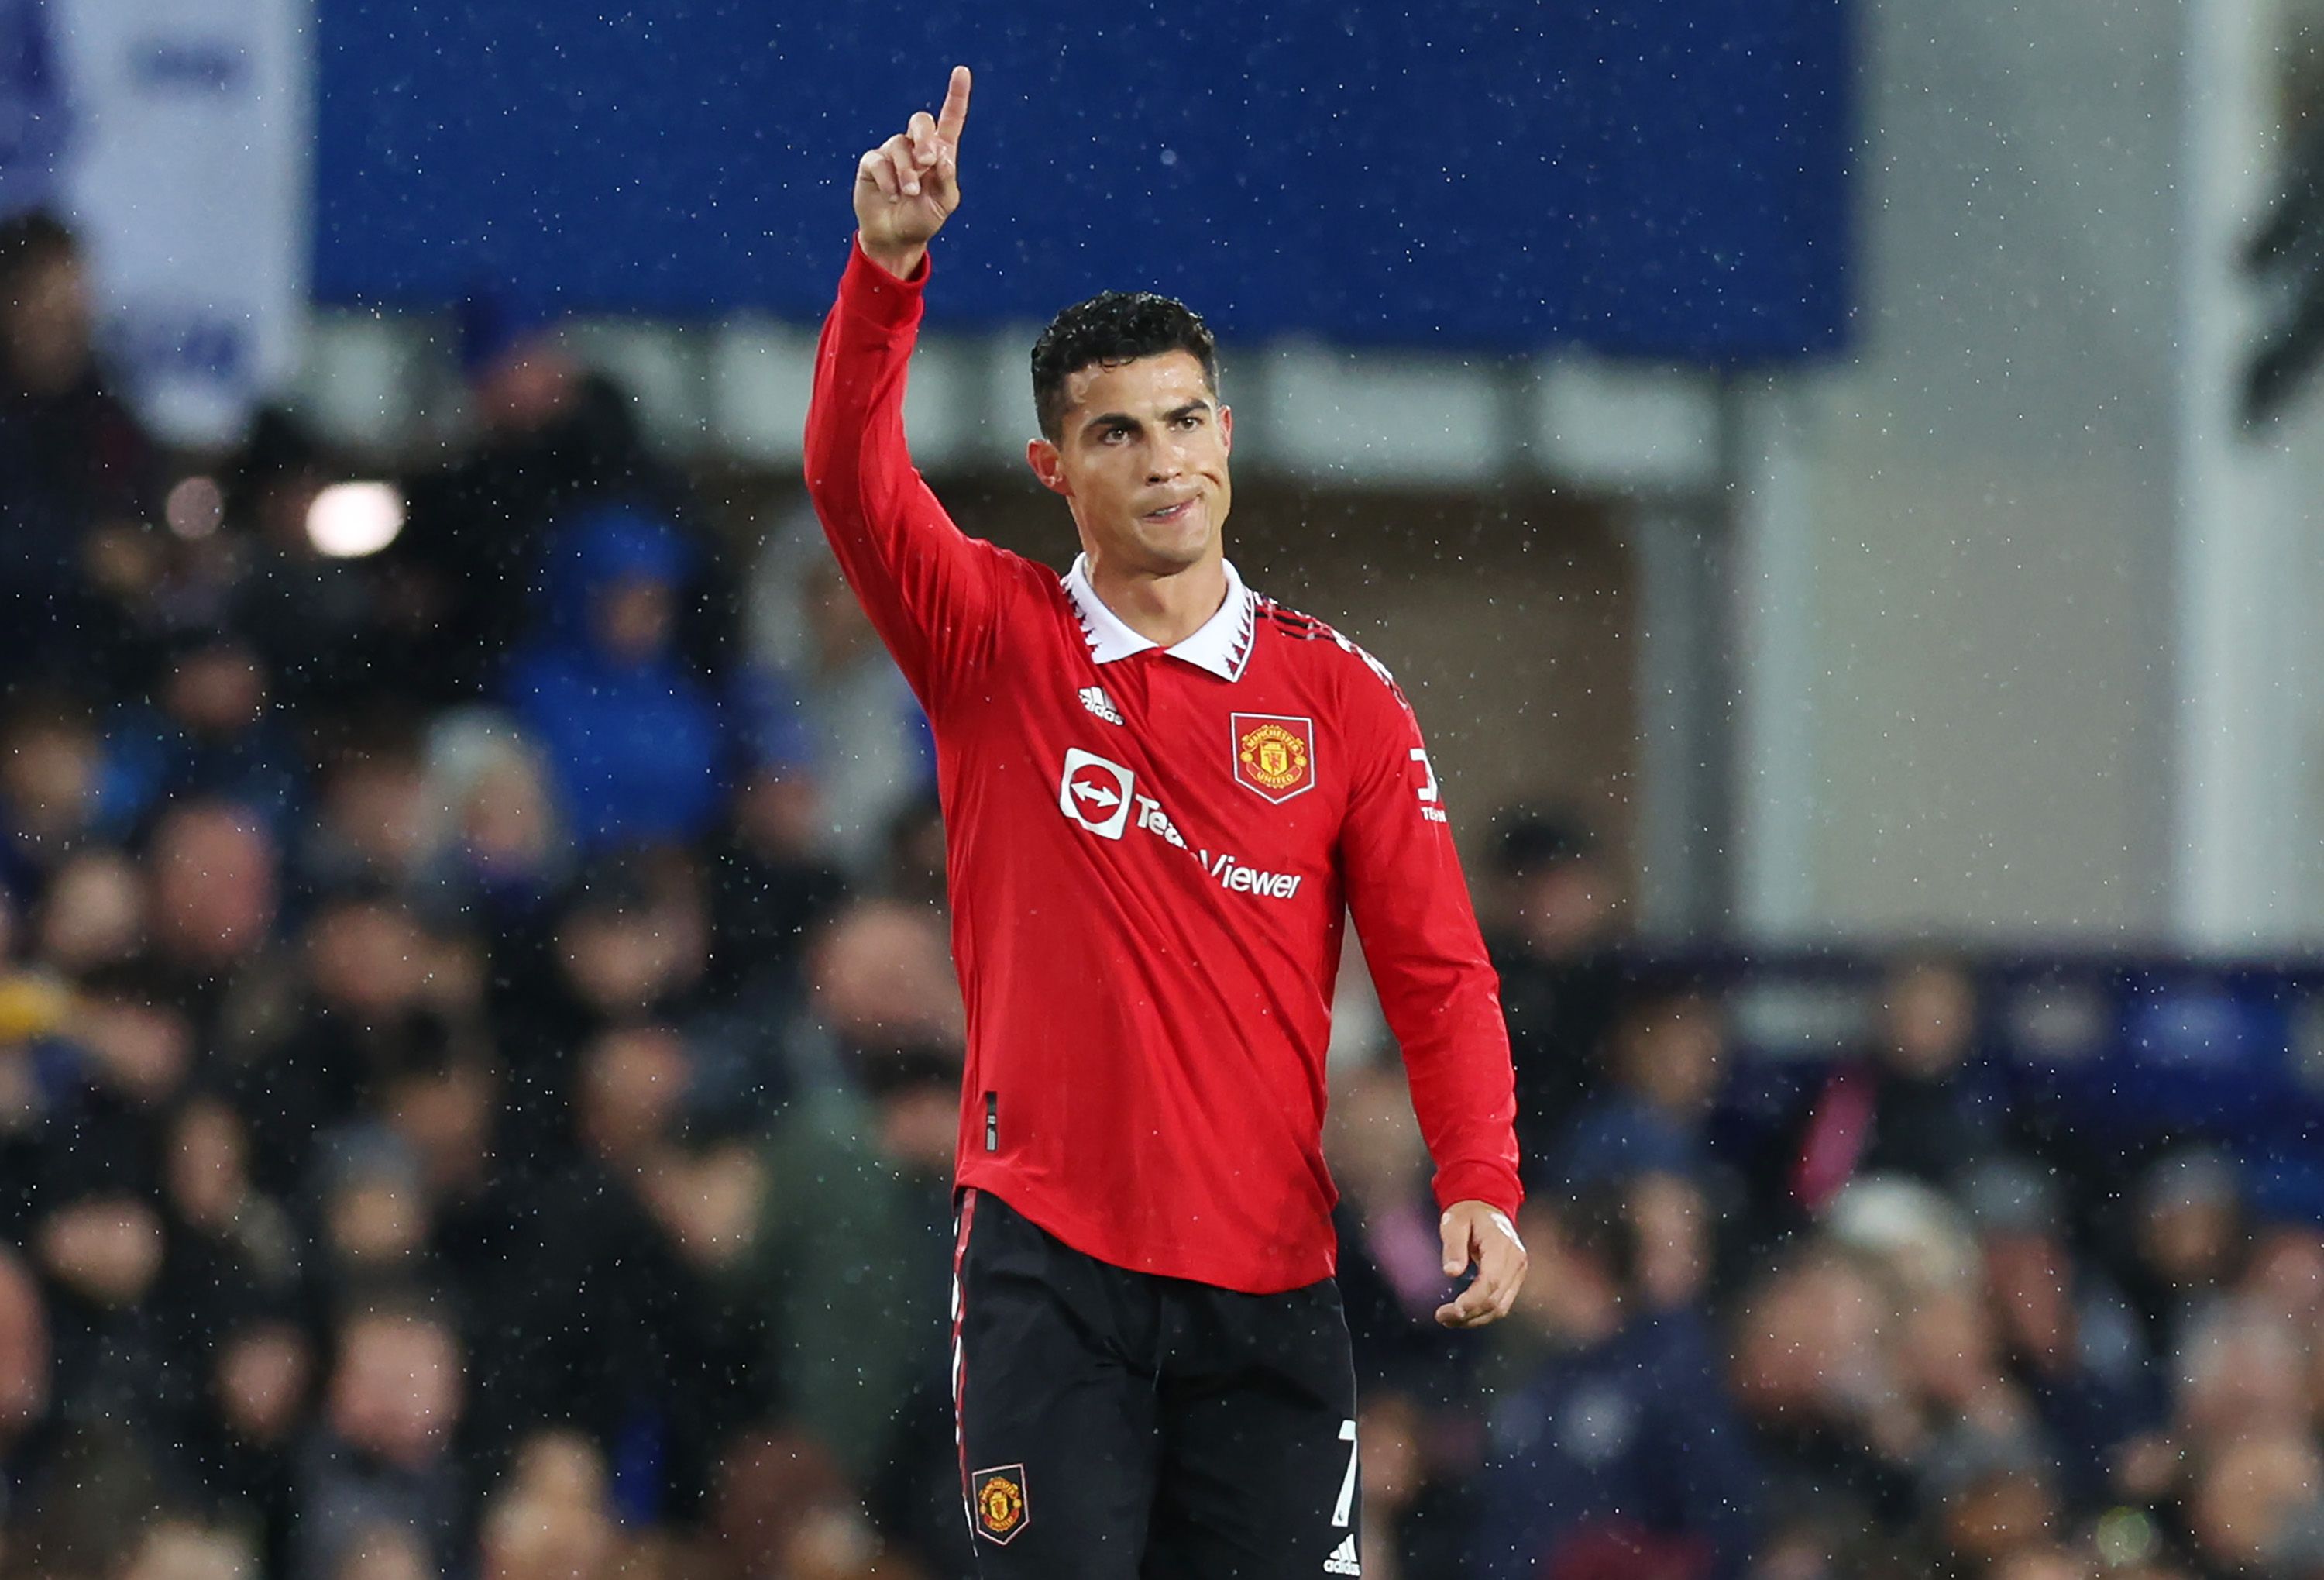 ristiano Ronaldo of Manchester United celebrates 